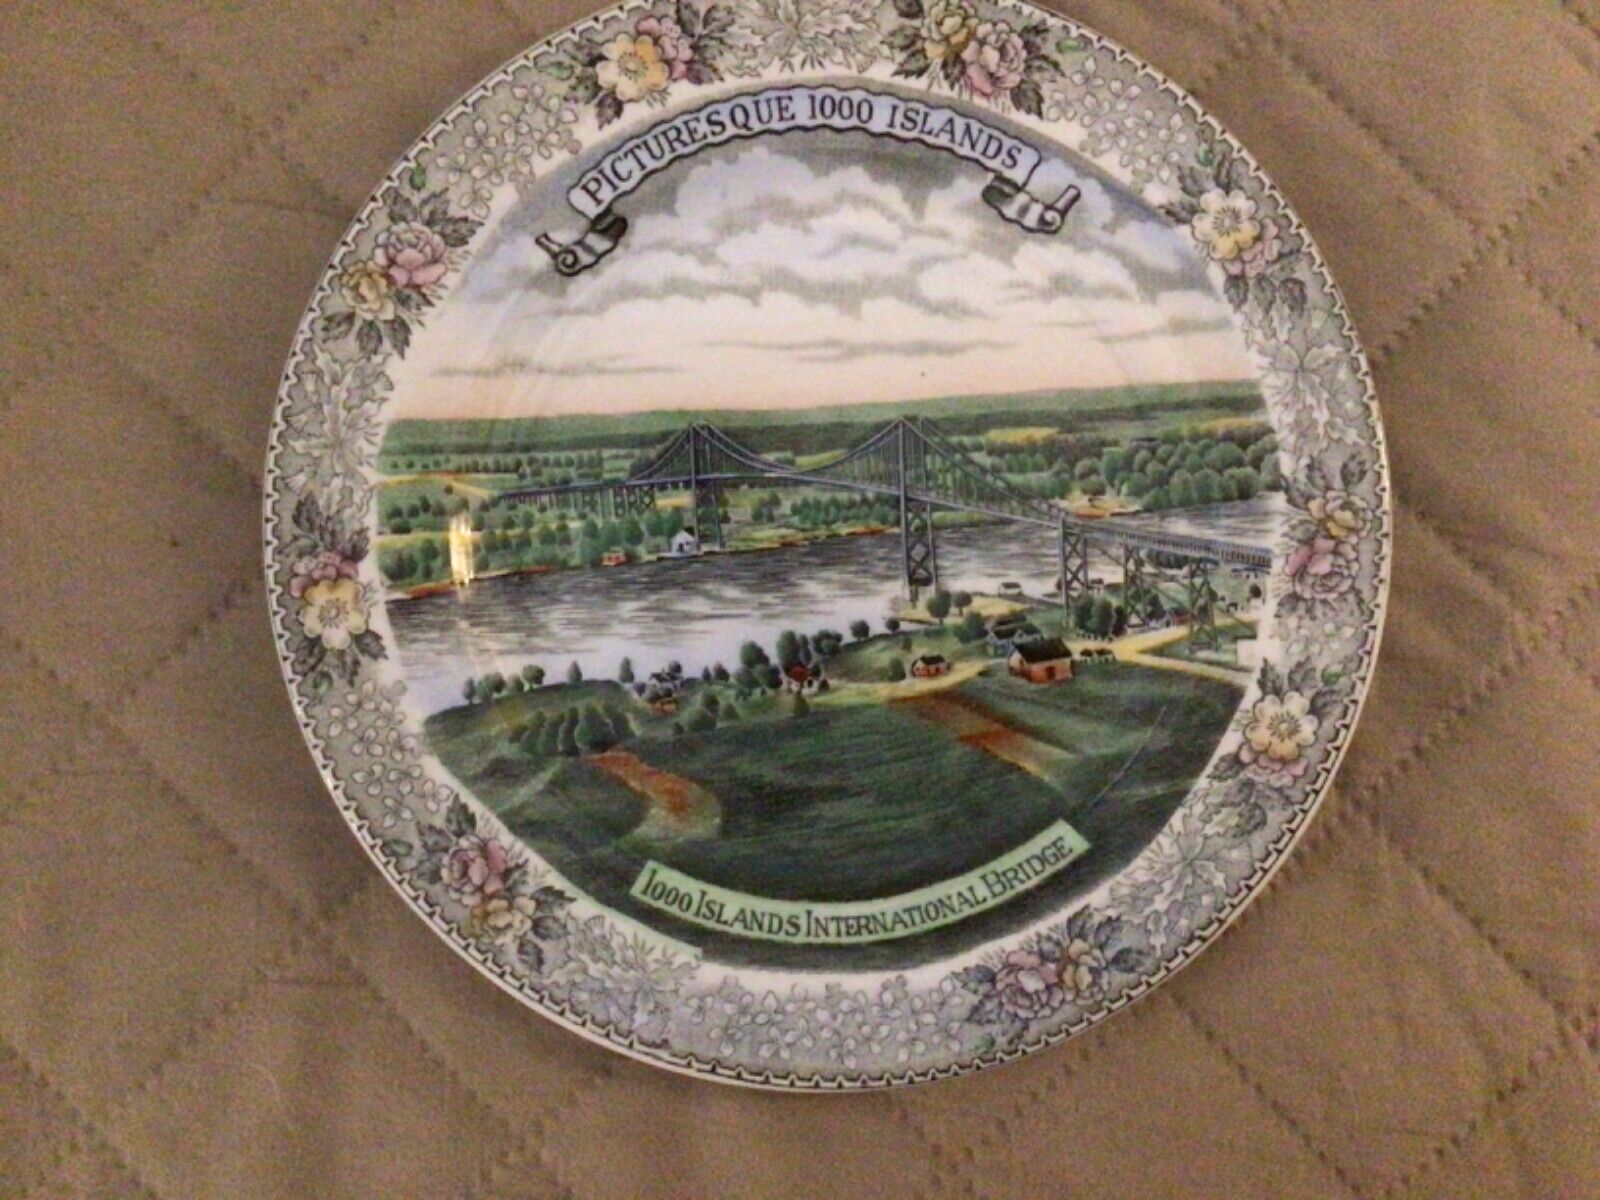 Old English Staffordshire Ware Picturesque 1000 Island International Bridgeplate